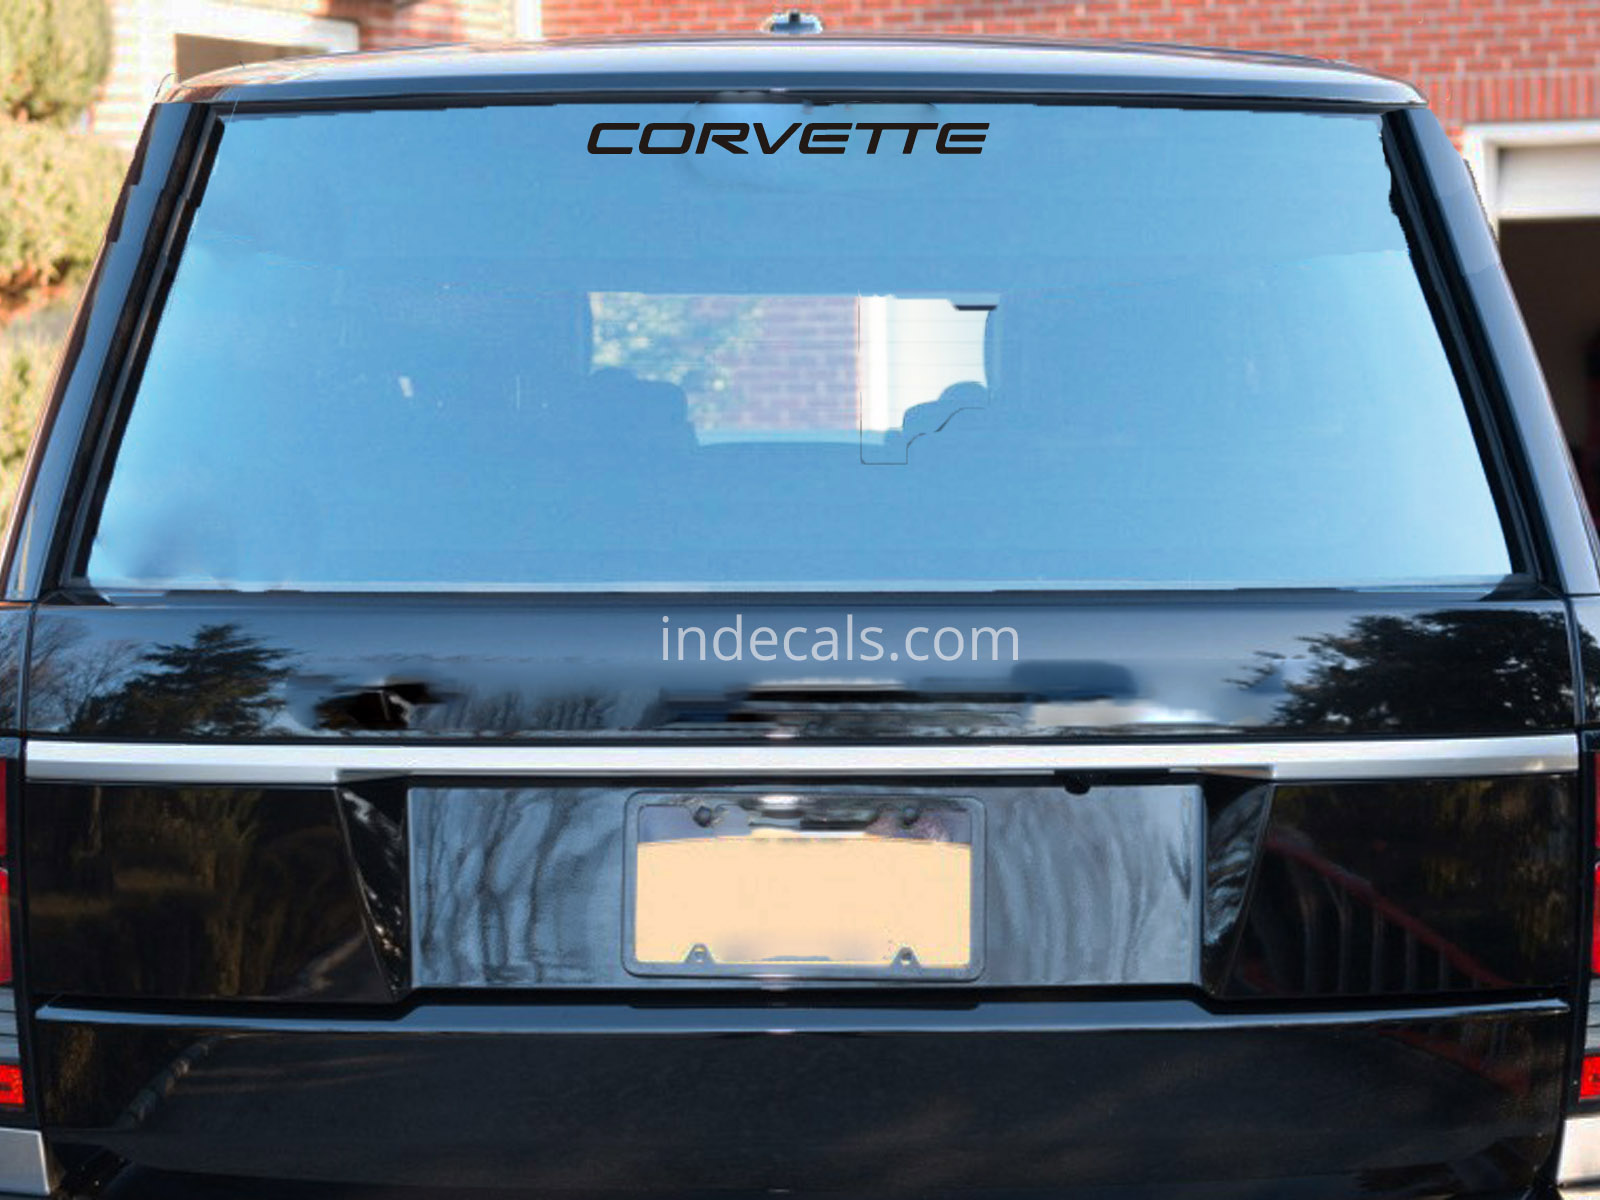 1 x Corvette Sticker for Windshield or Back Window - Black